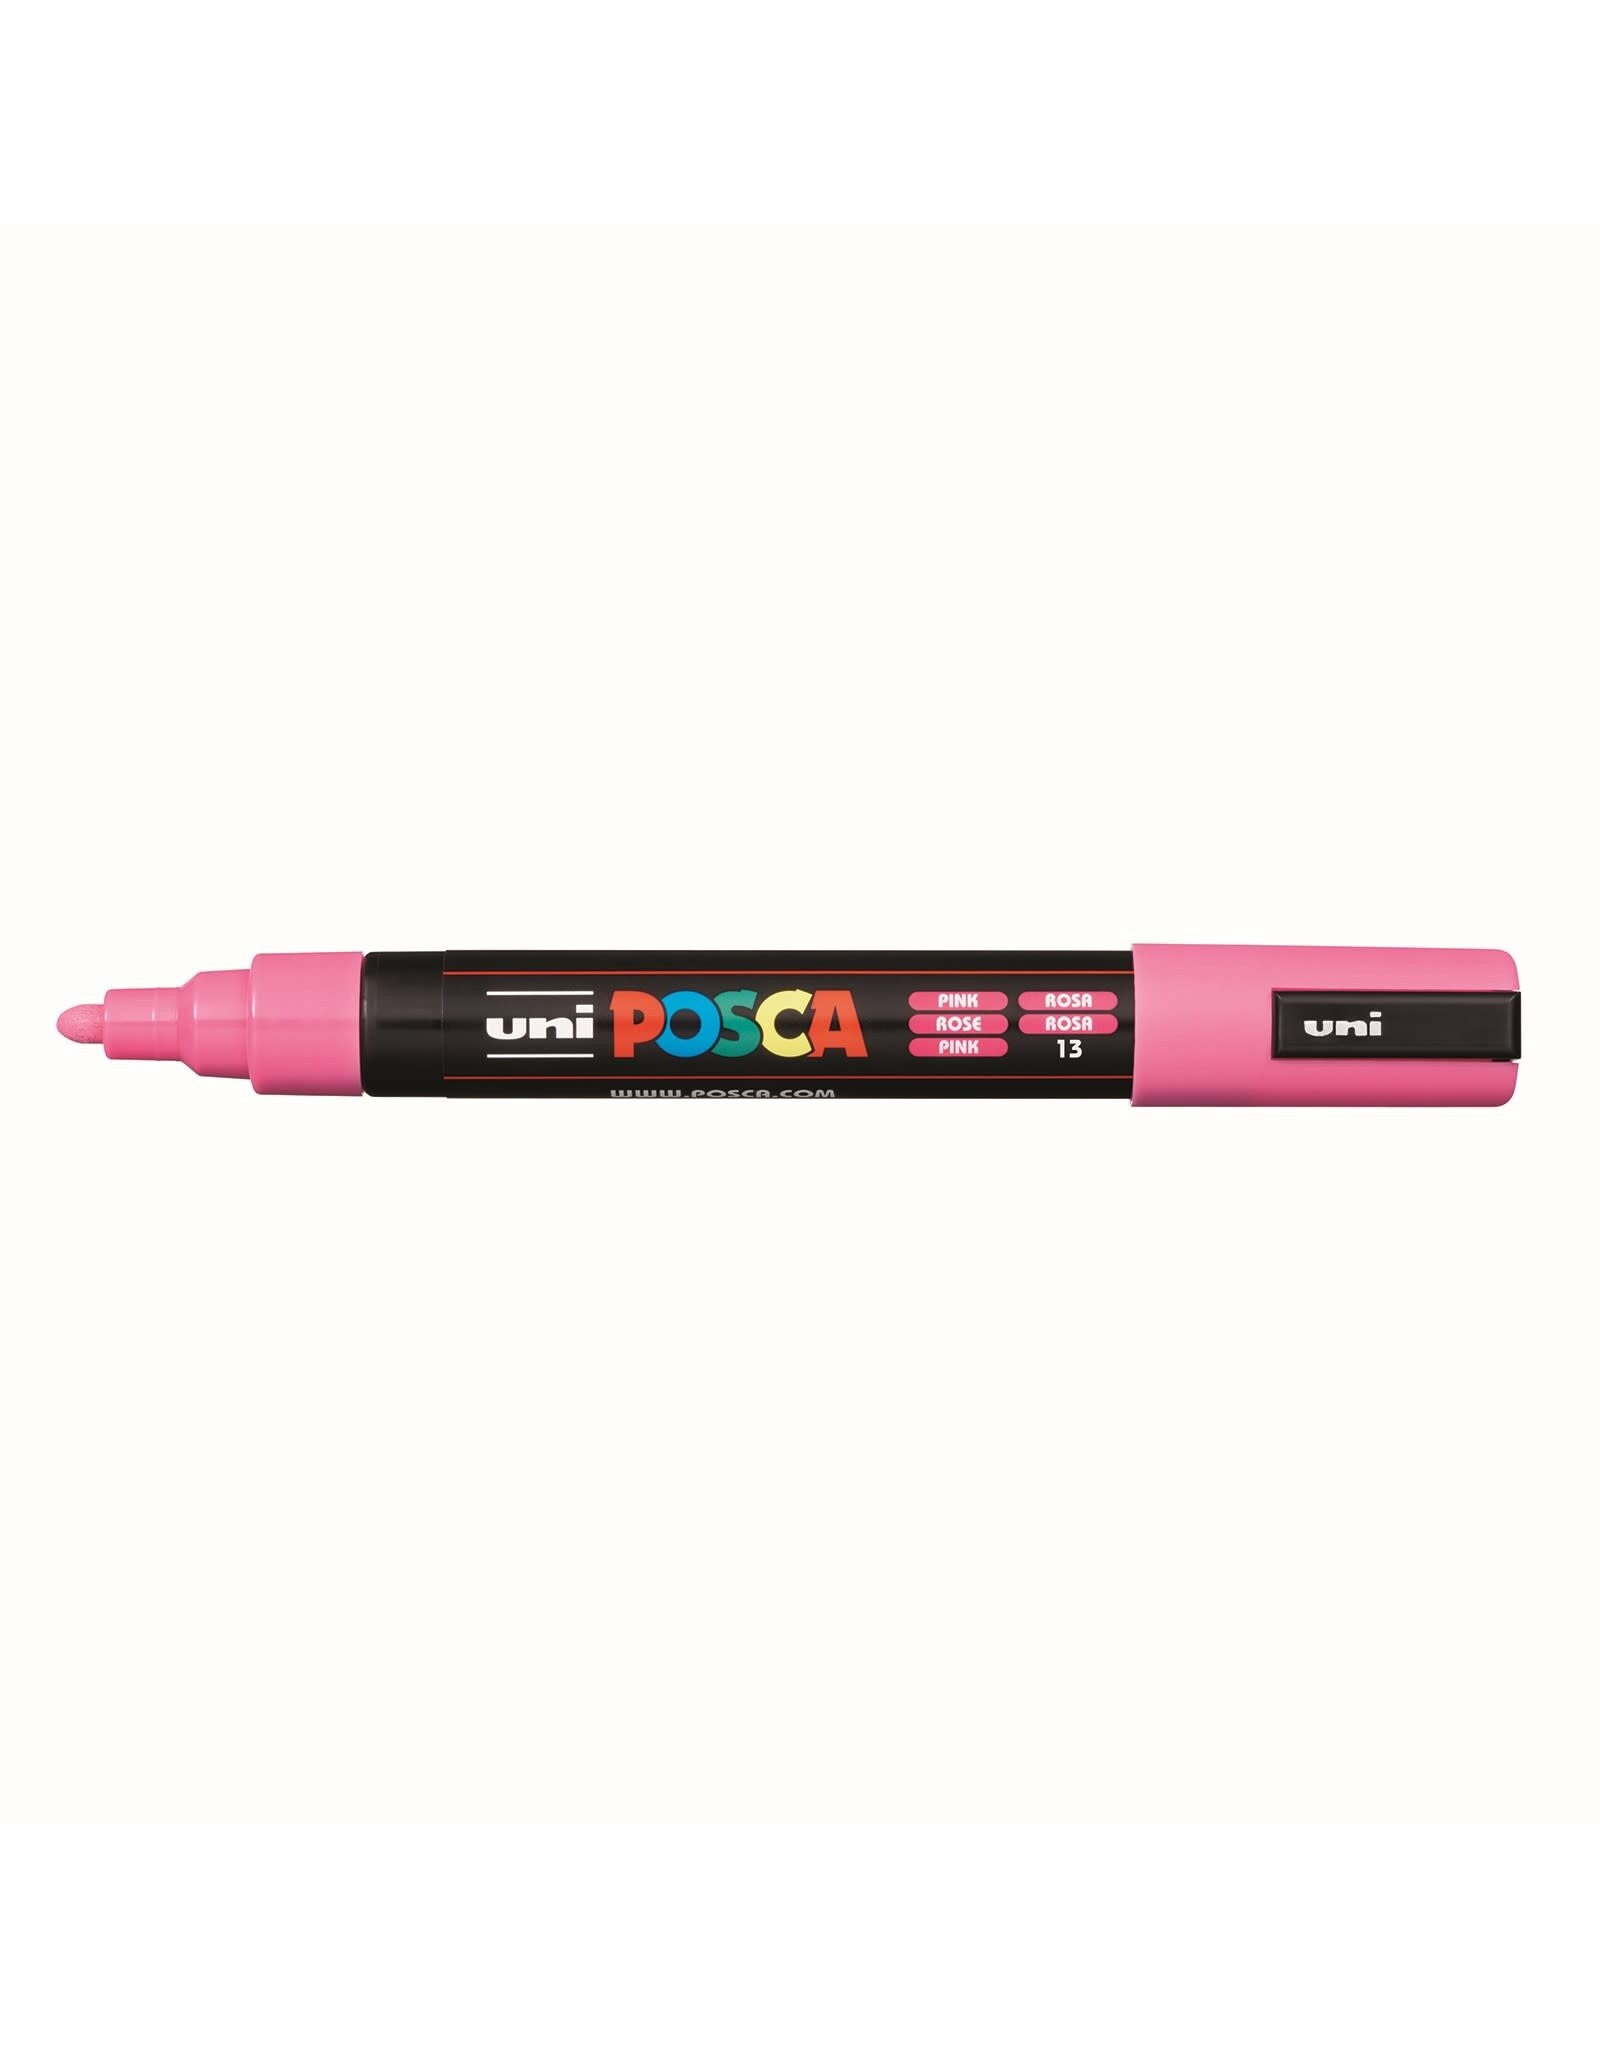 POSCA Uni POSCA Paint Marker, Medium, Pink